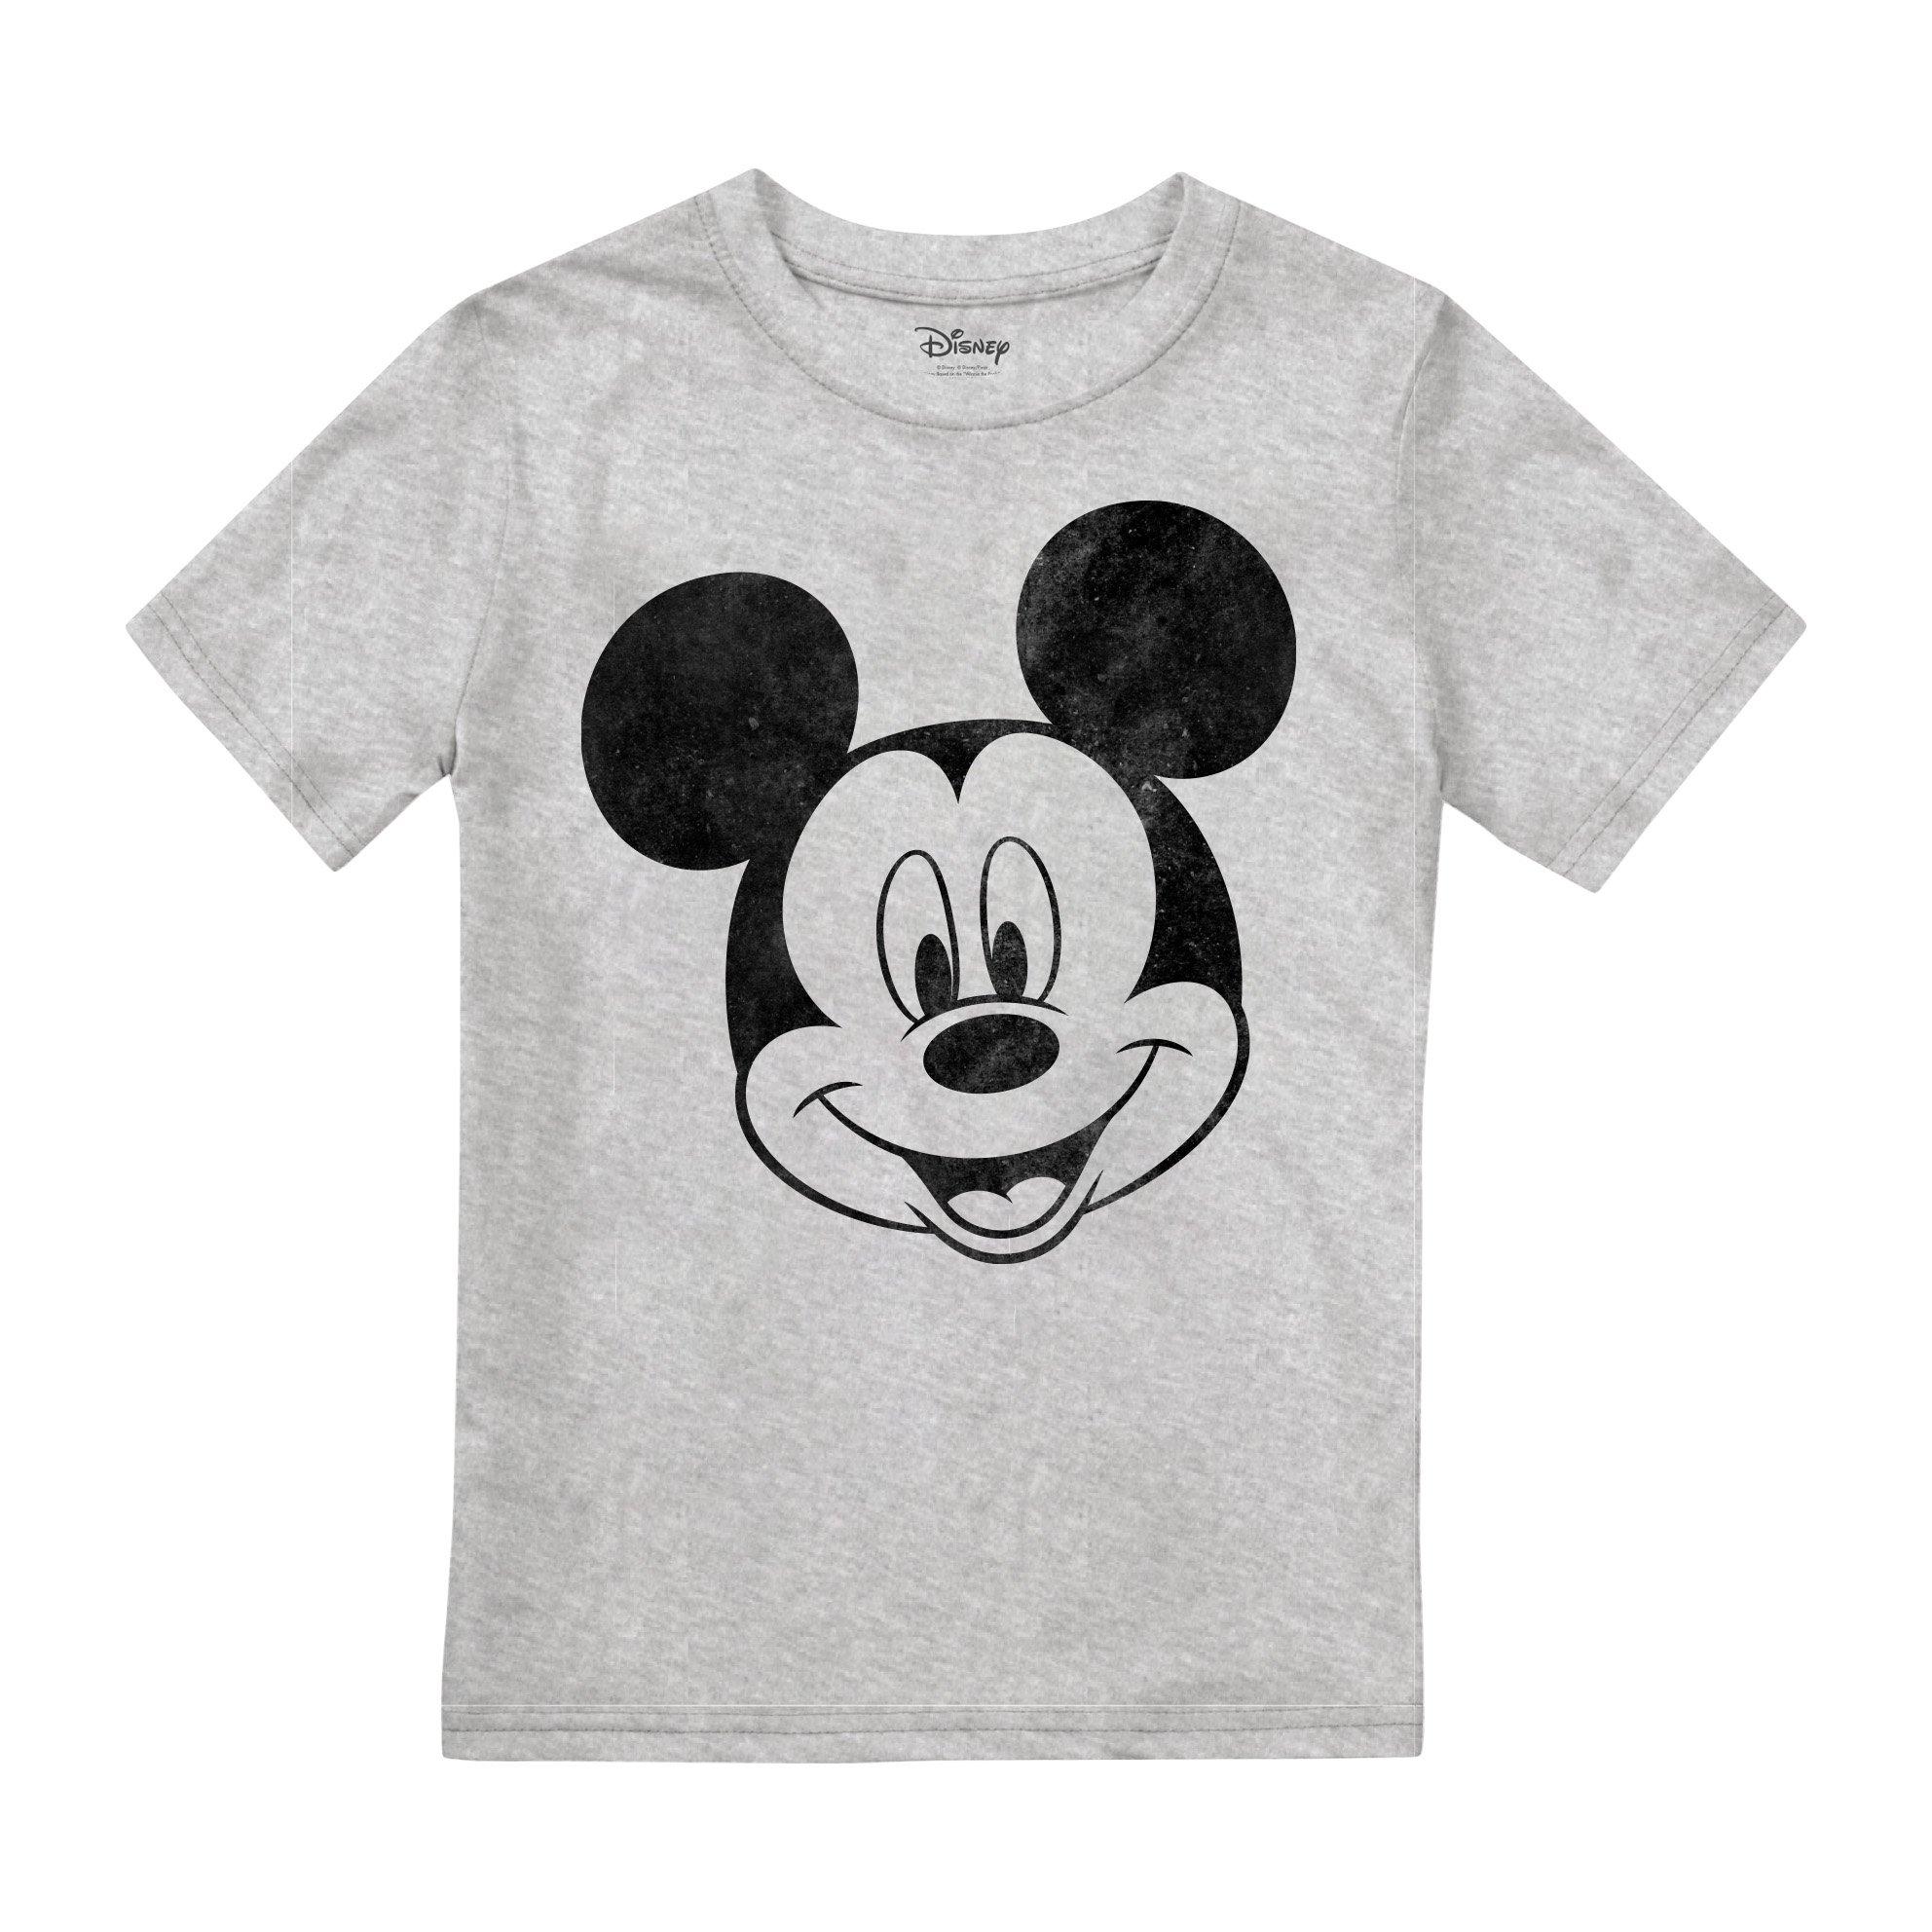 Однотонная футболка с Микки Маусом Disney, серый цена и фото